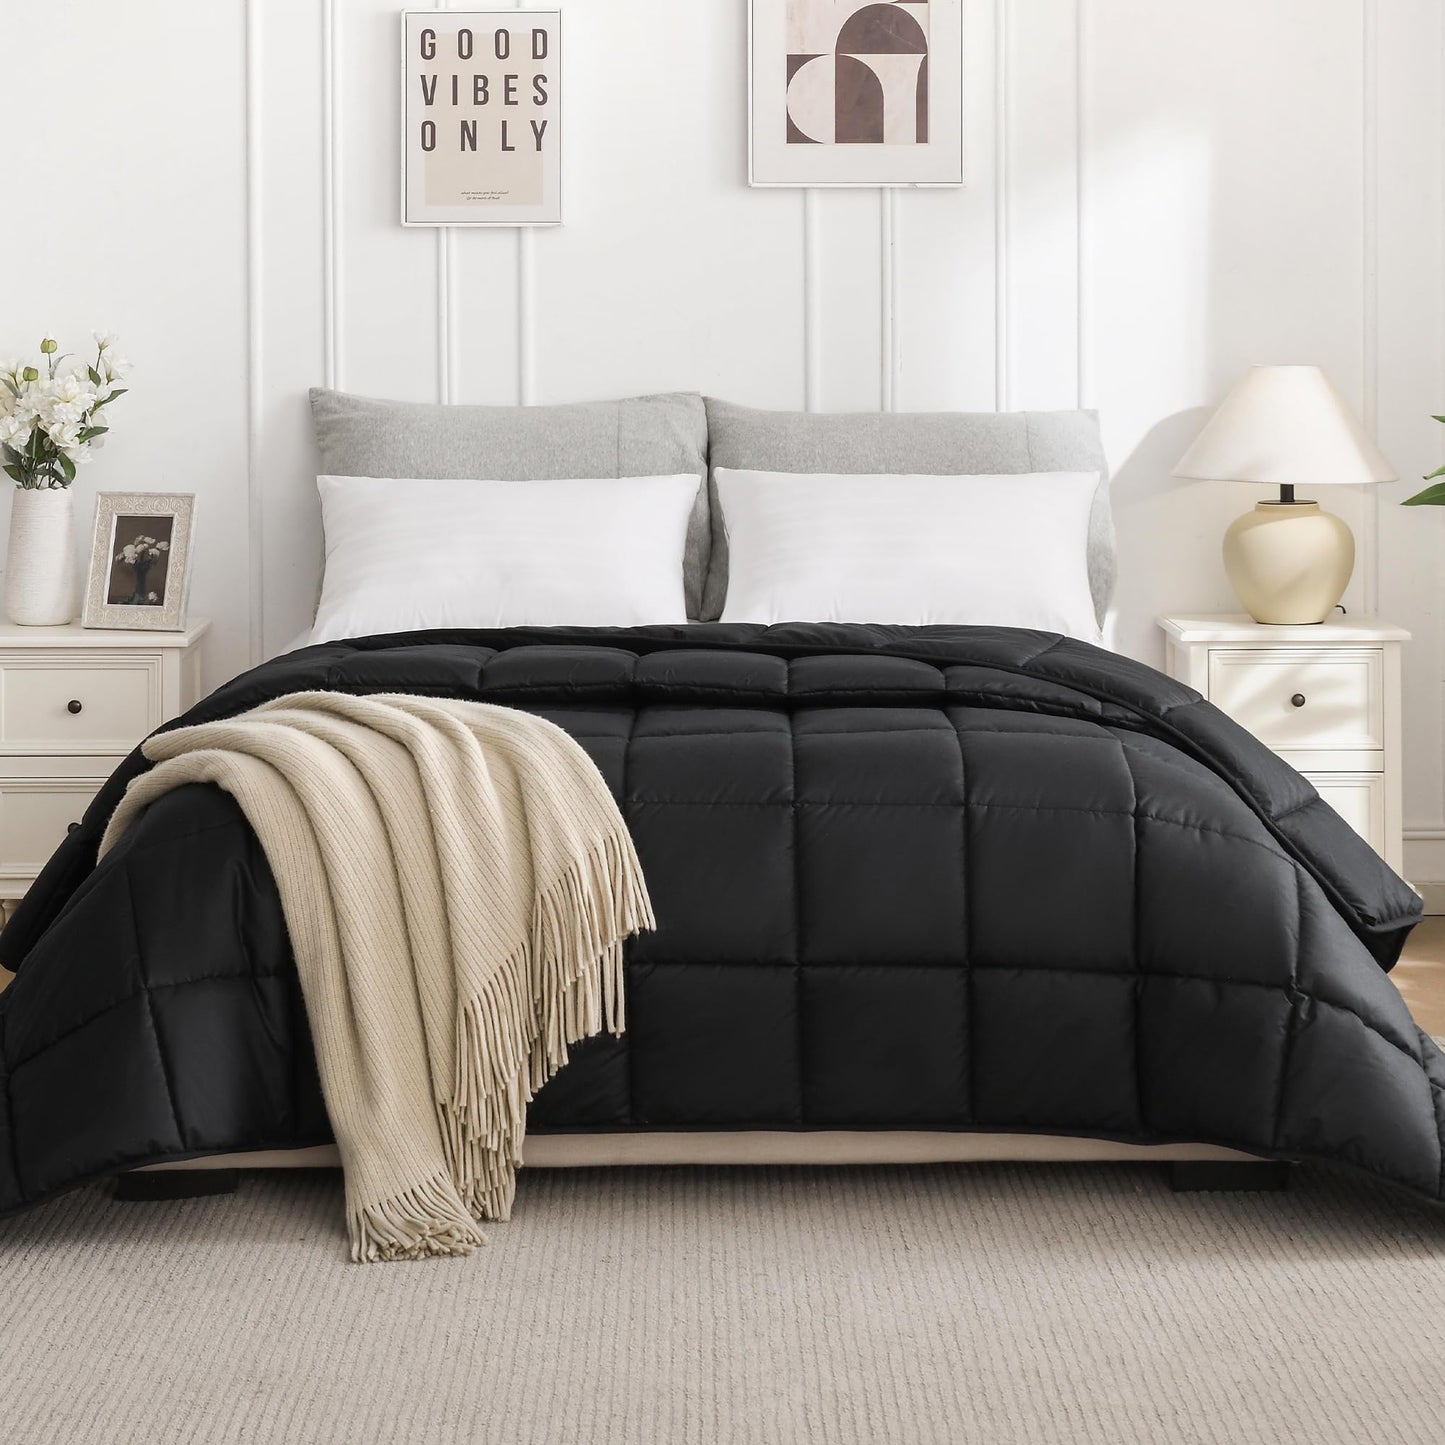 BEDENSIT Full Black Bedding Comforter, Down Alternative Duvet Insert, All Season Comforter with Corner Tabs, Machine Washable, Lightweight